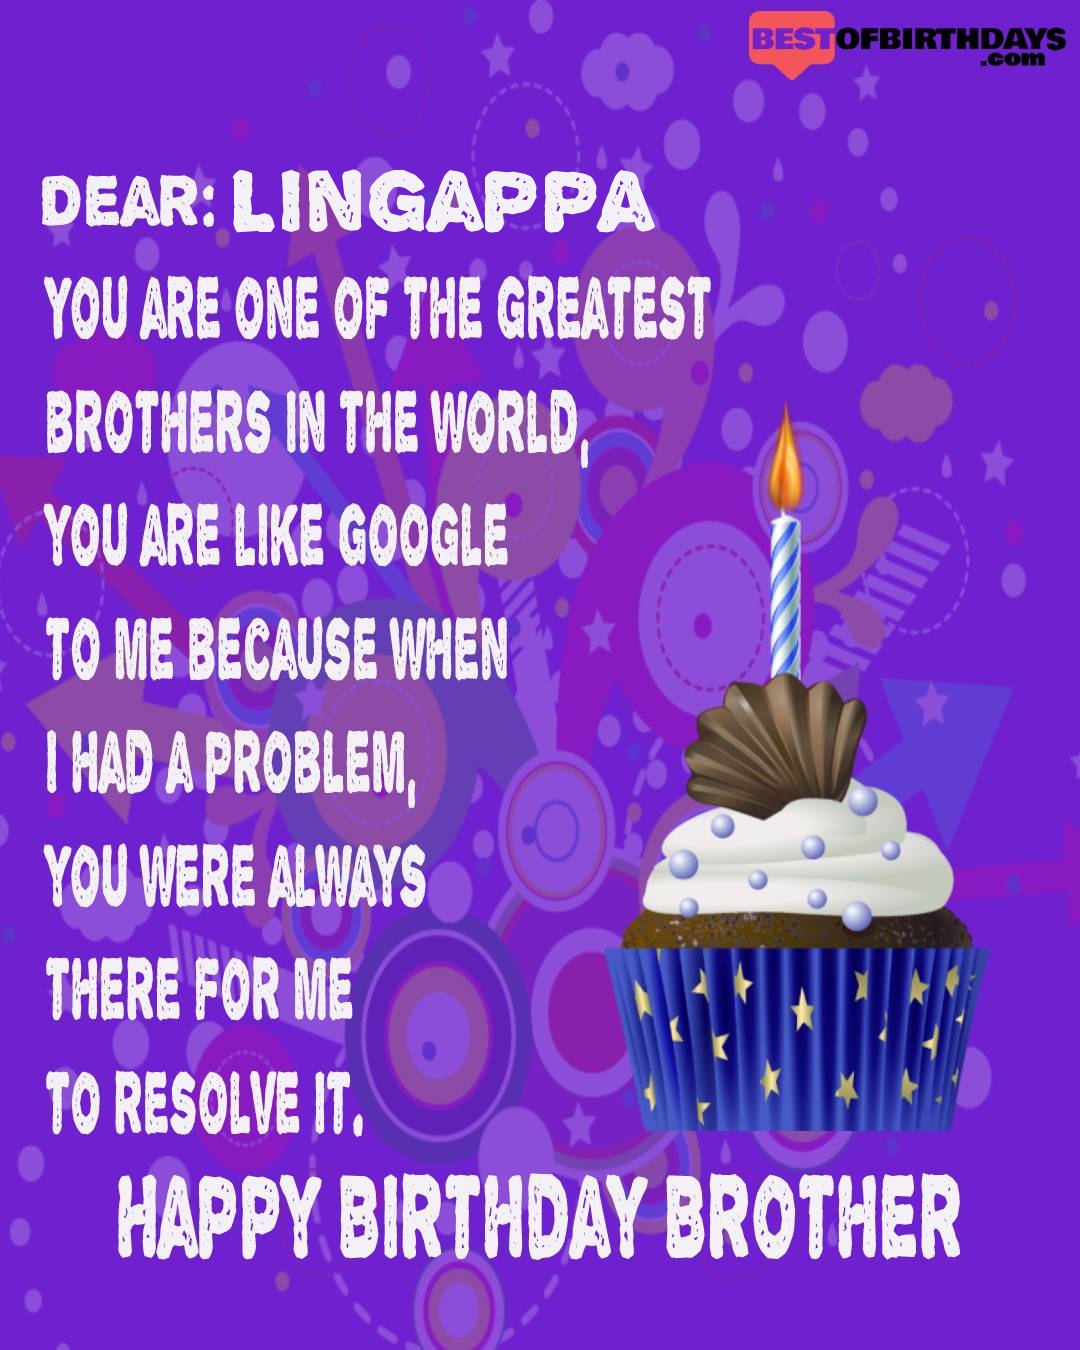 Happy birthday lingappa bhai brother bro